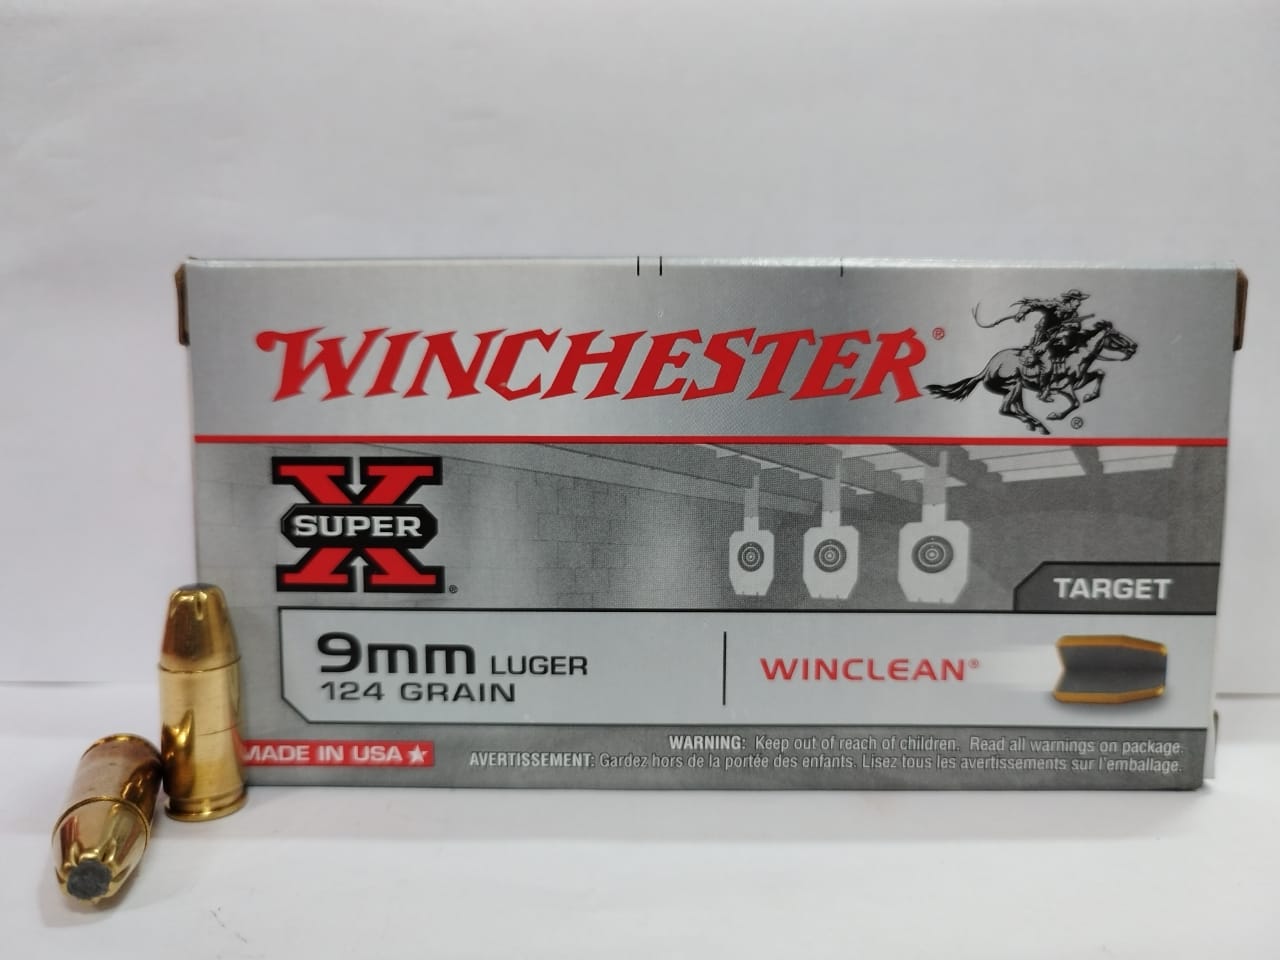 WINCHESTER- 9mm LUGER (124 grain) WINCLEAN TARGET